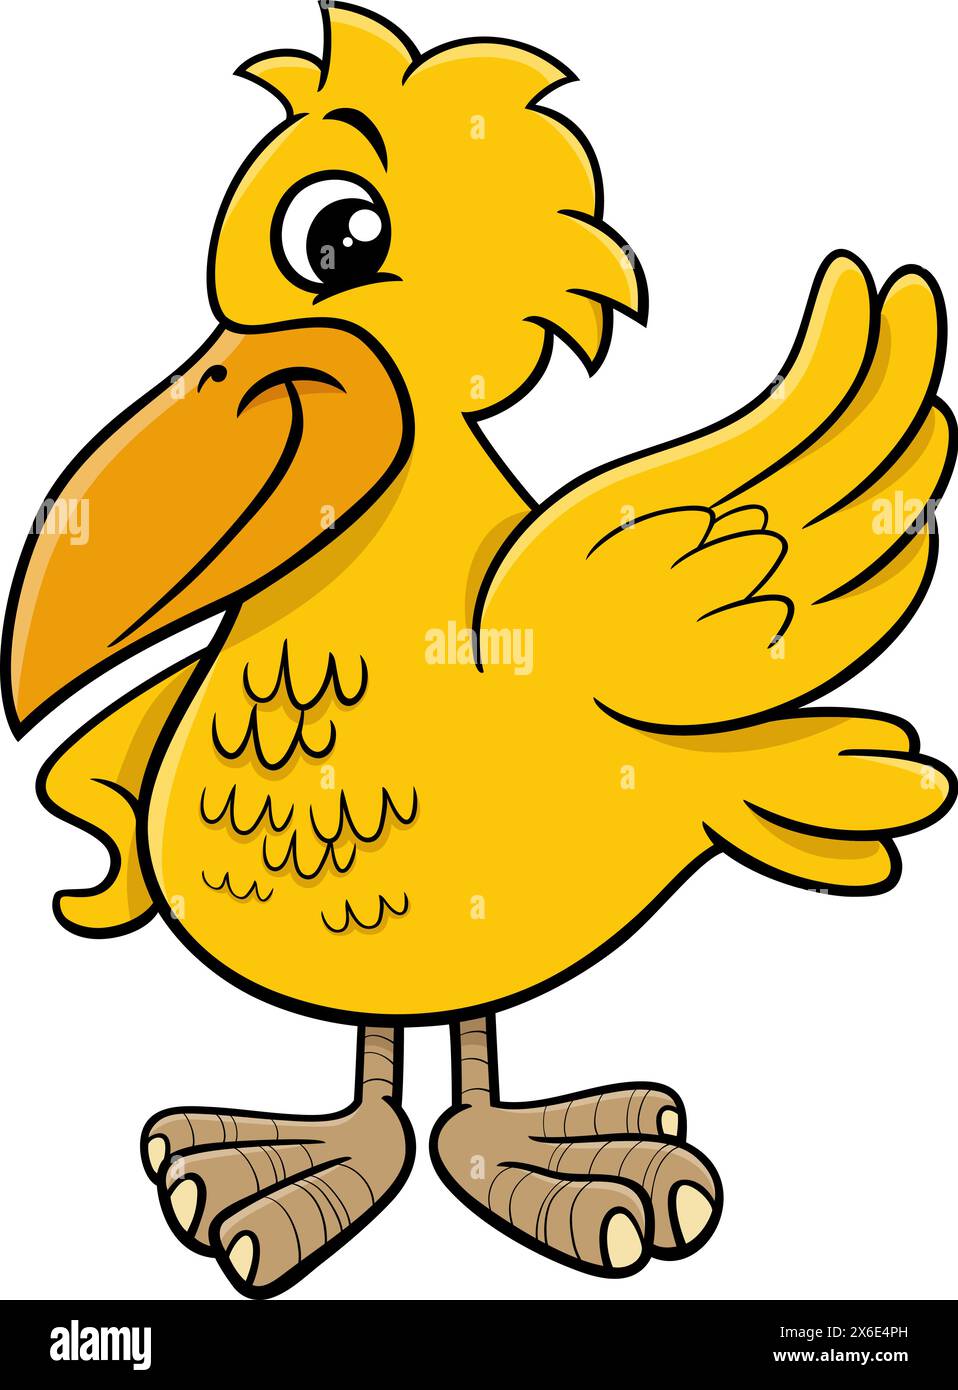 Cartoon illustration of fantasy yellow bird comic animal character Stock Vector